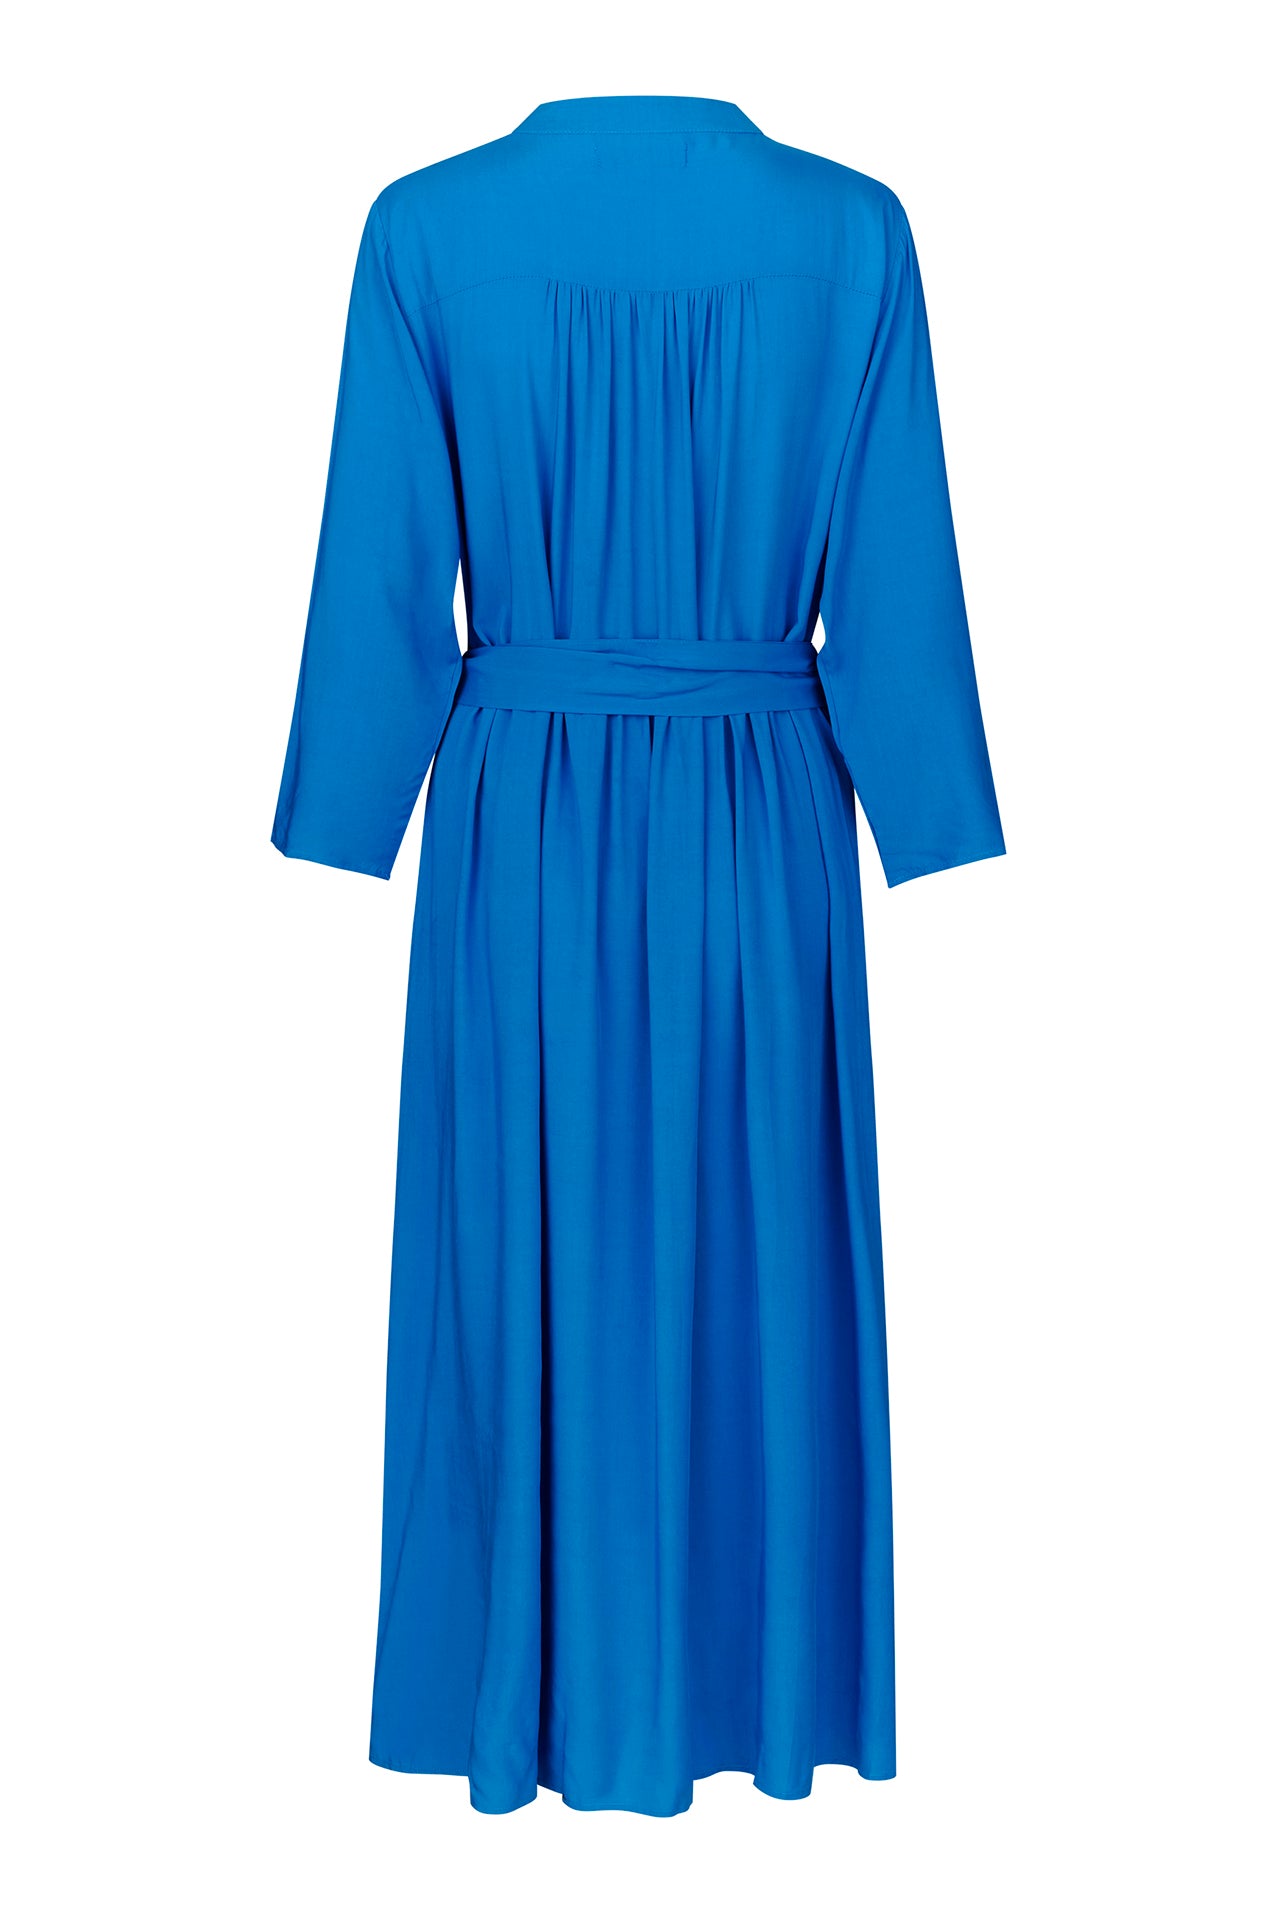 Lollys Laundry HarperLL Maxi Dress 3/4 Dress 20 Blue